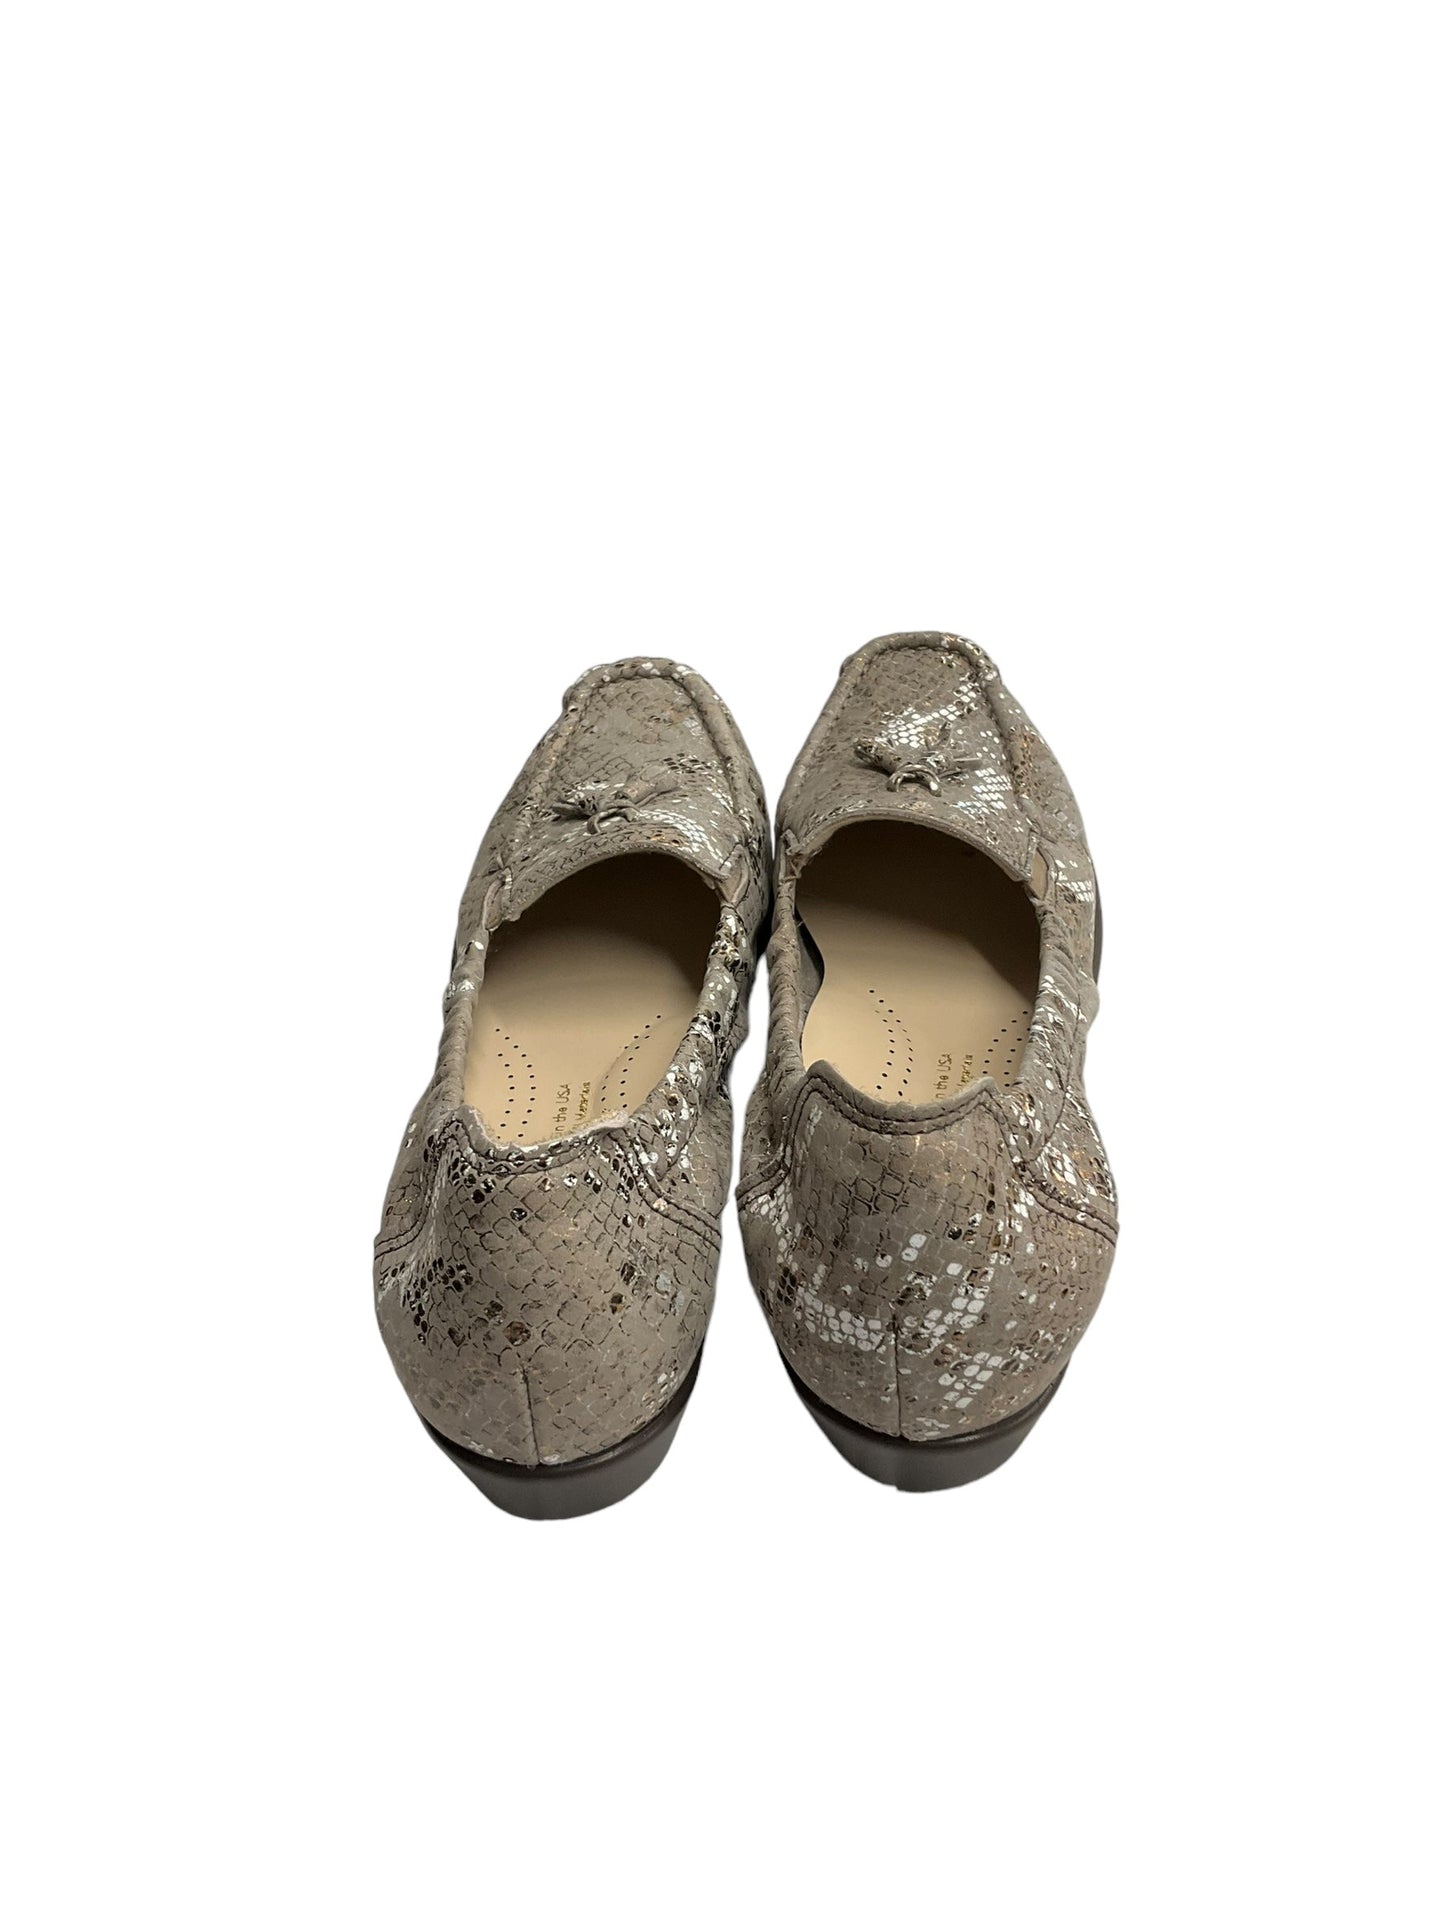 Snakeskin Print Shoes Flats Sas, Size 8.5